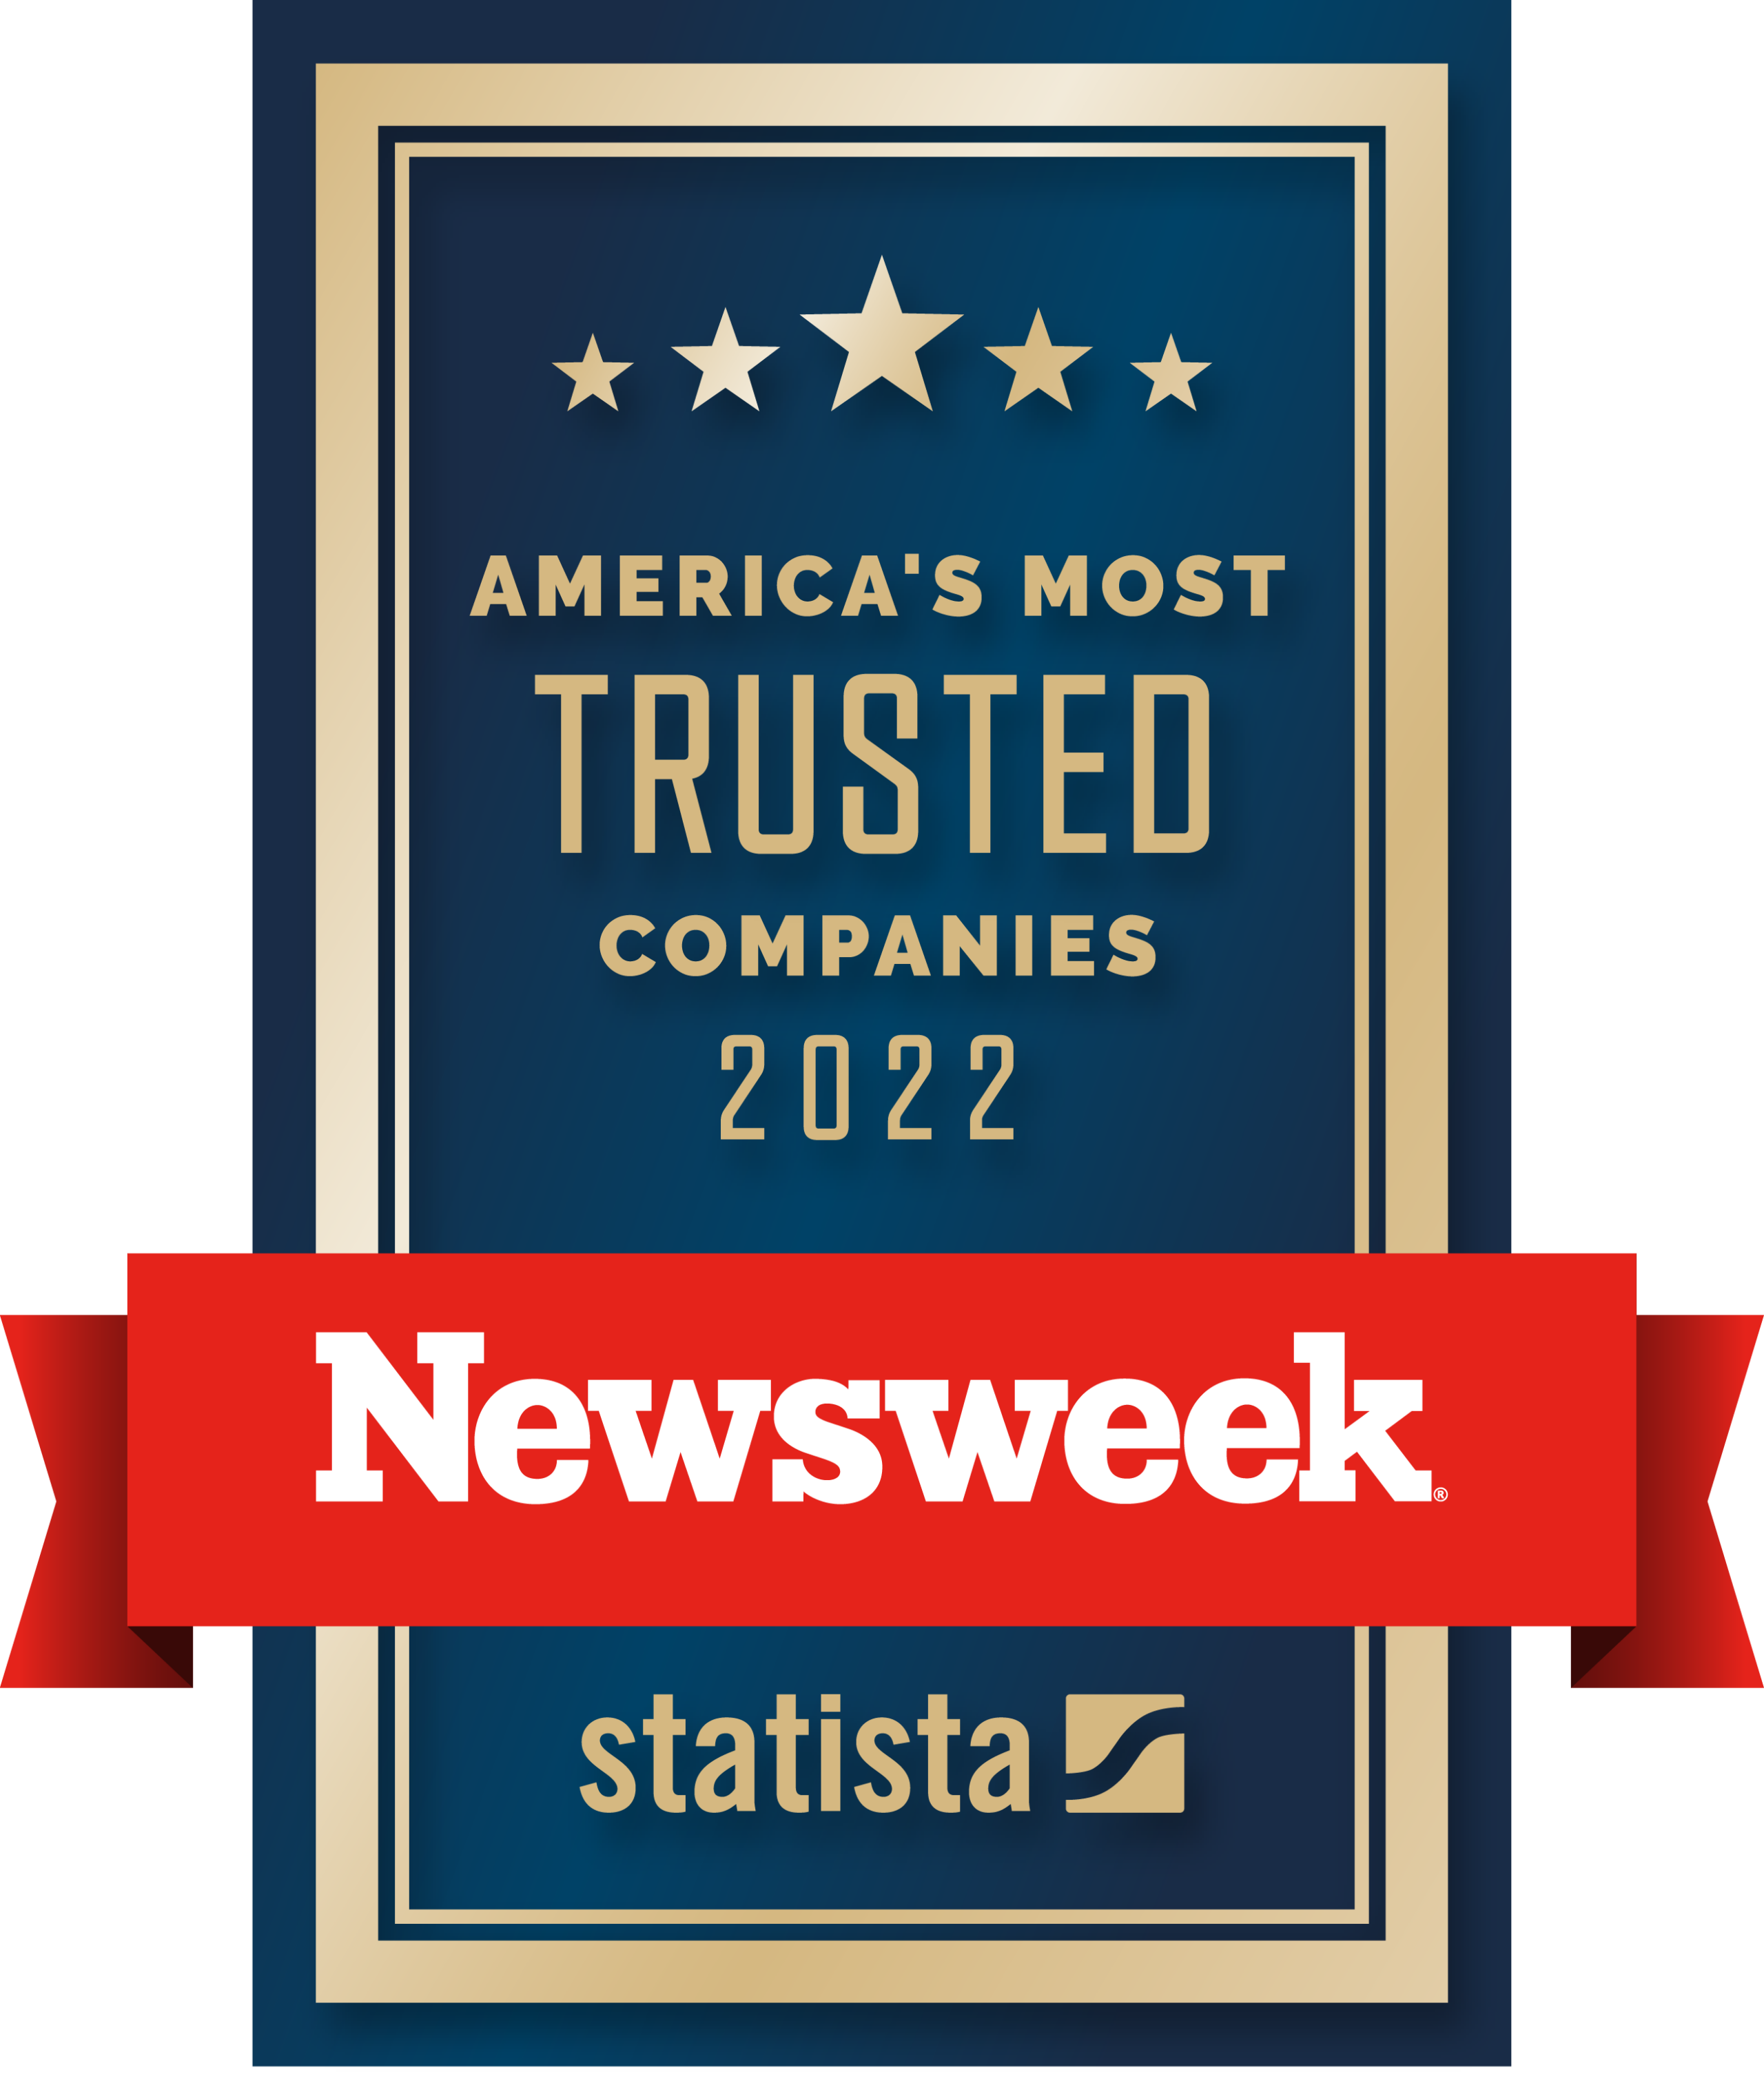 Newsweek - America's Most Trusted Companies 2022